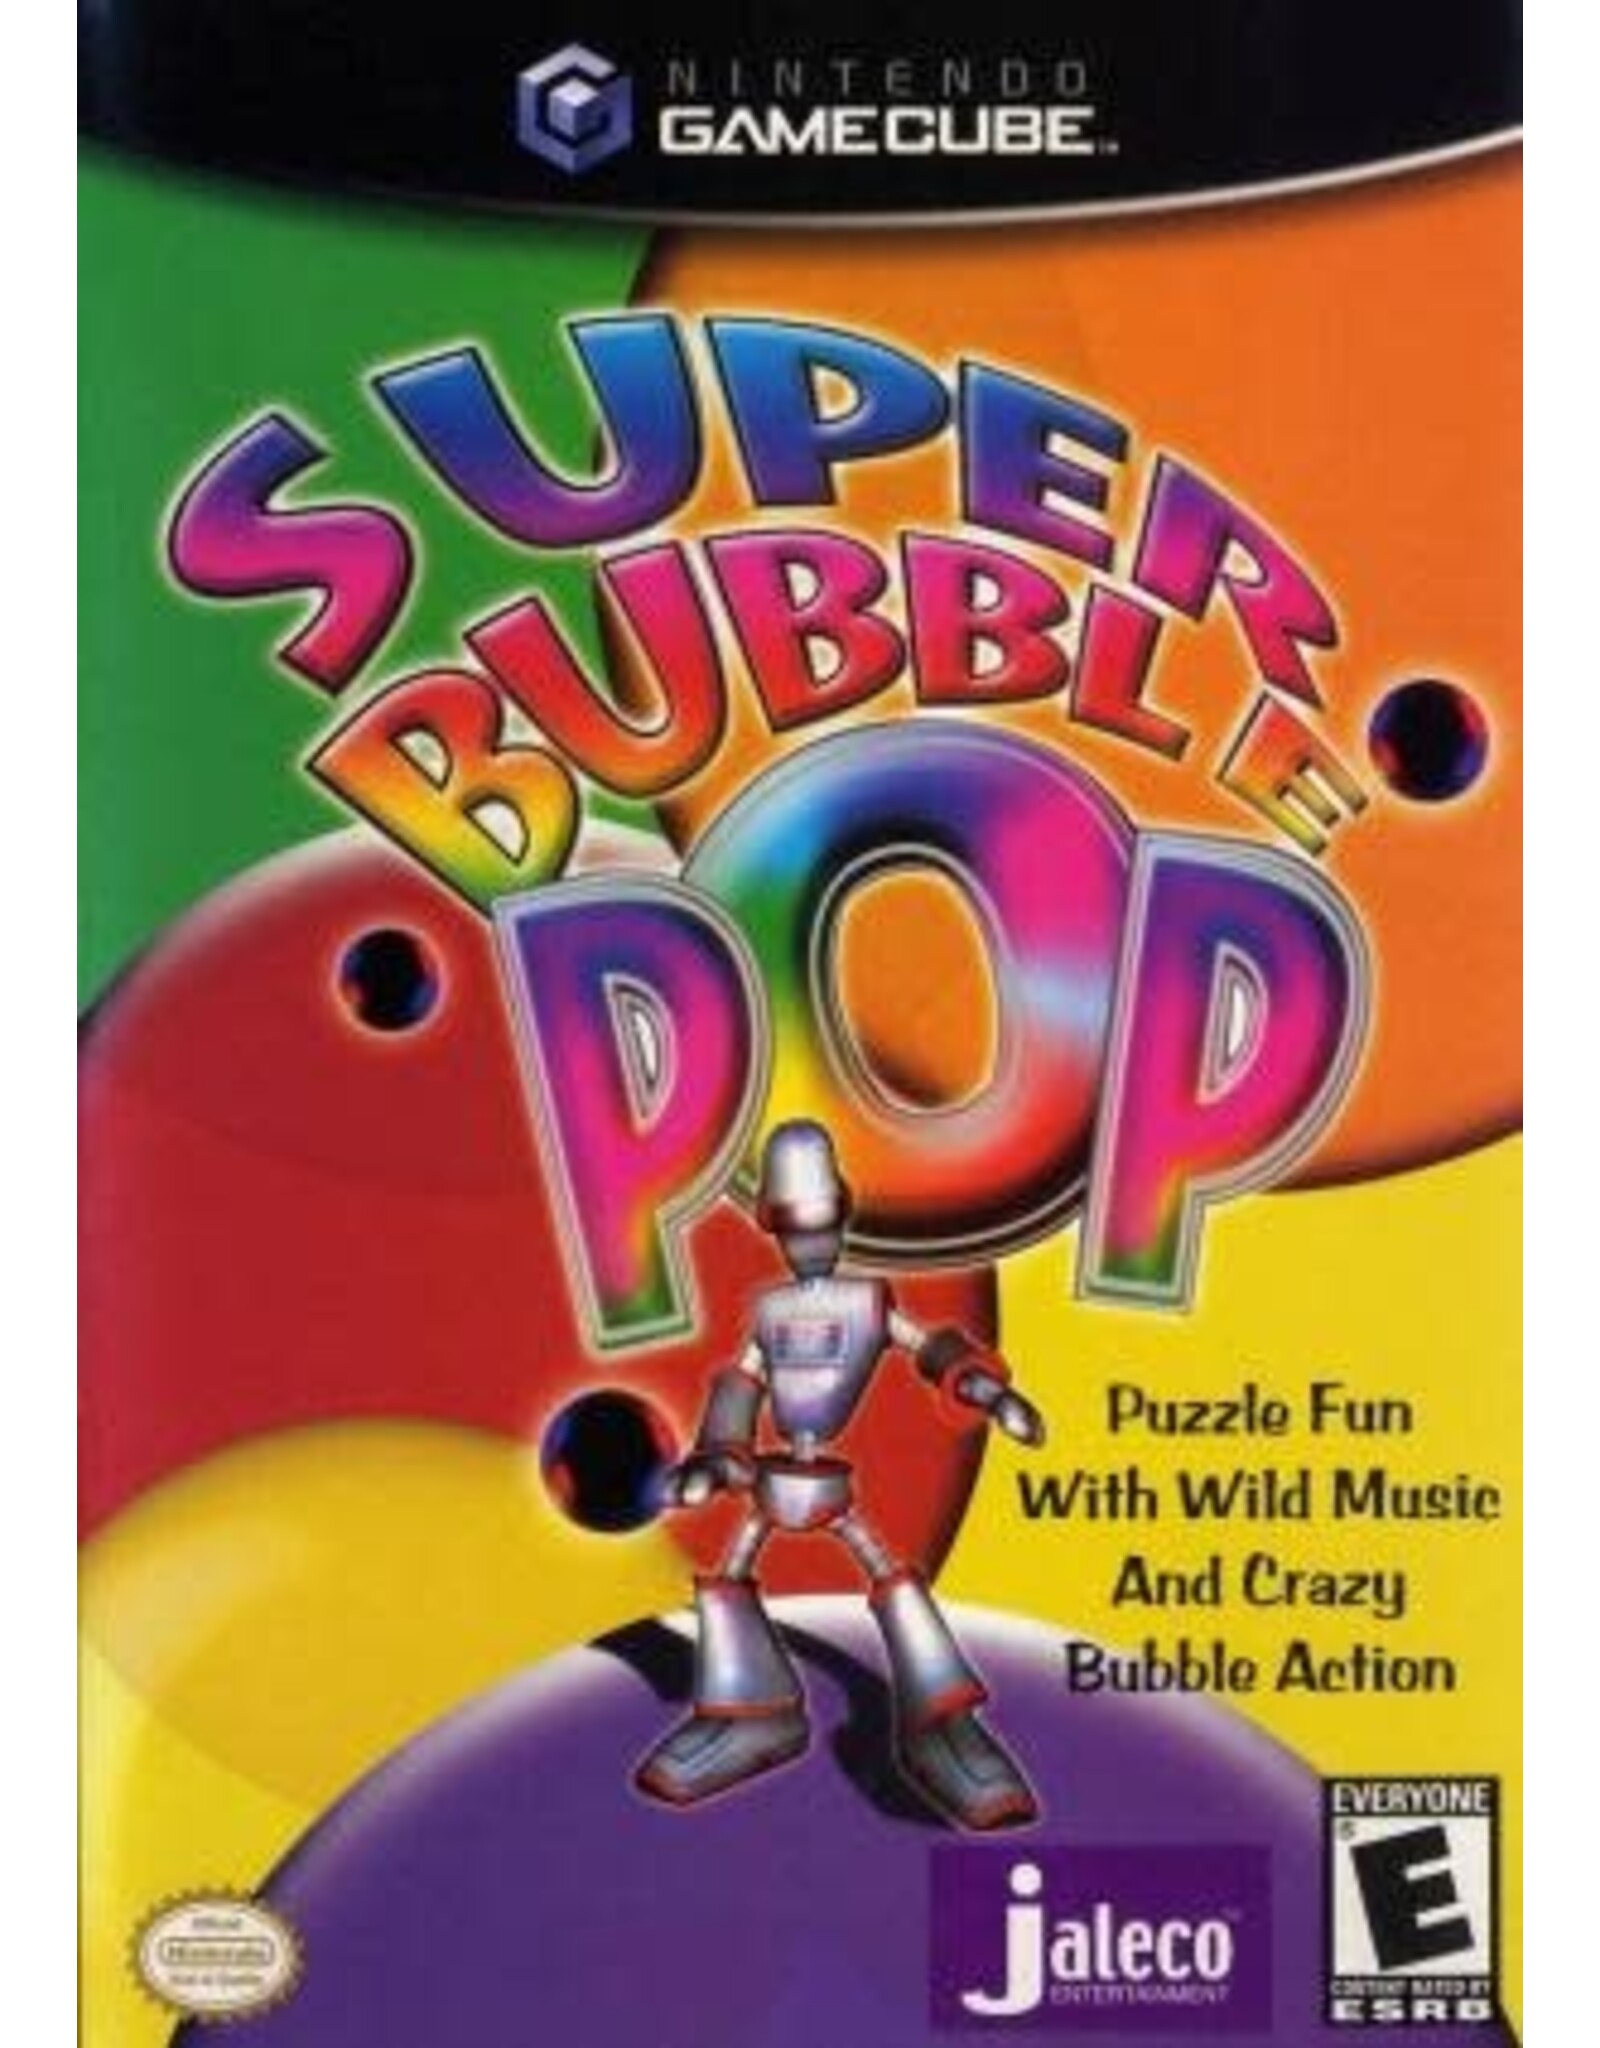 Gamecube Super Bubble Pop (CIB)